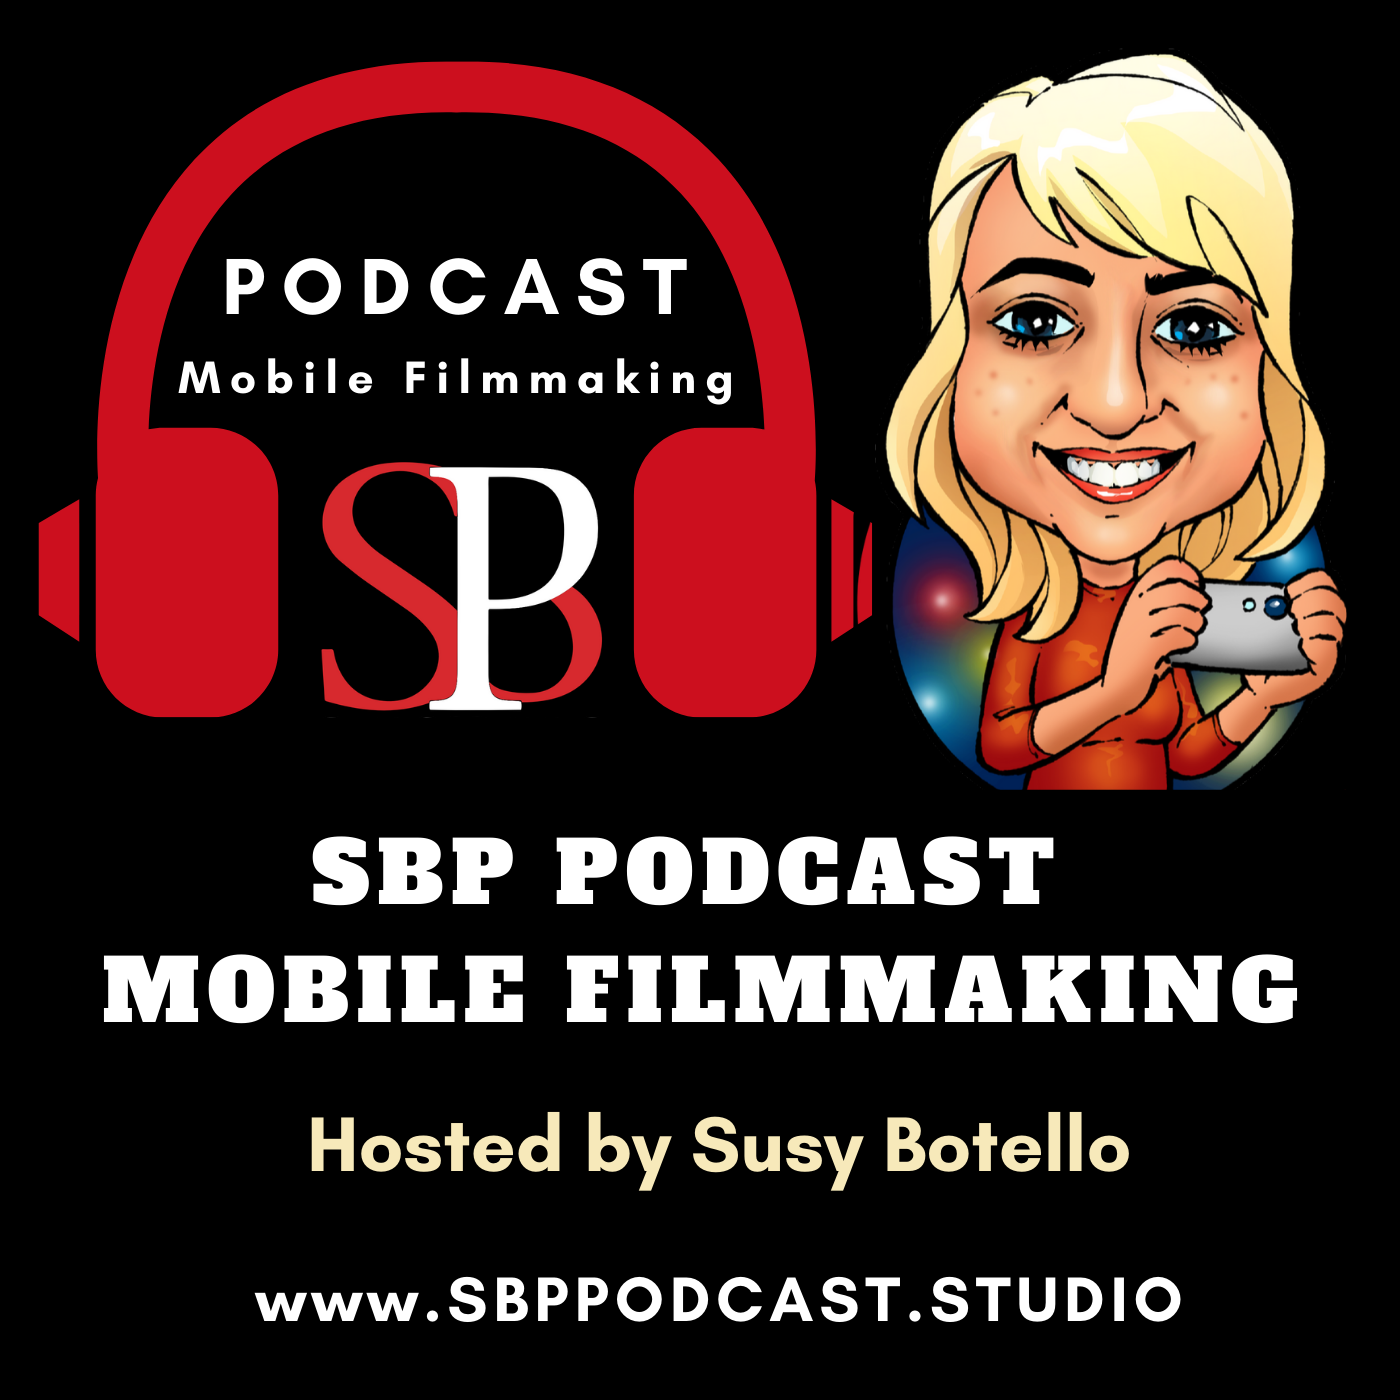 SBP Podcast Mobile Filmmaking Logo